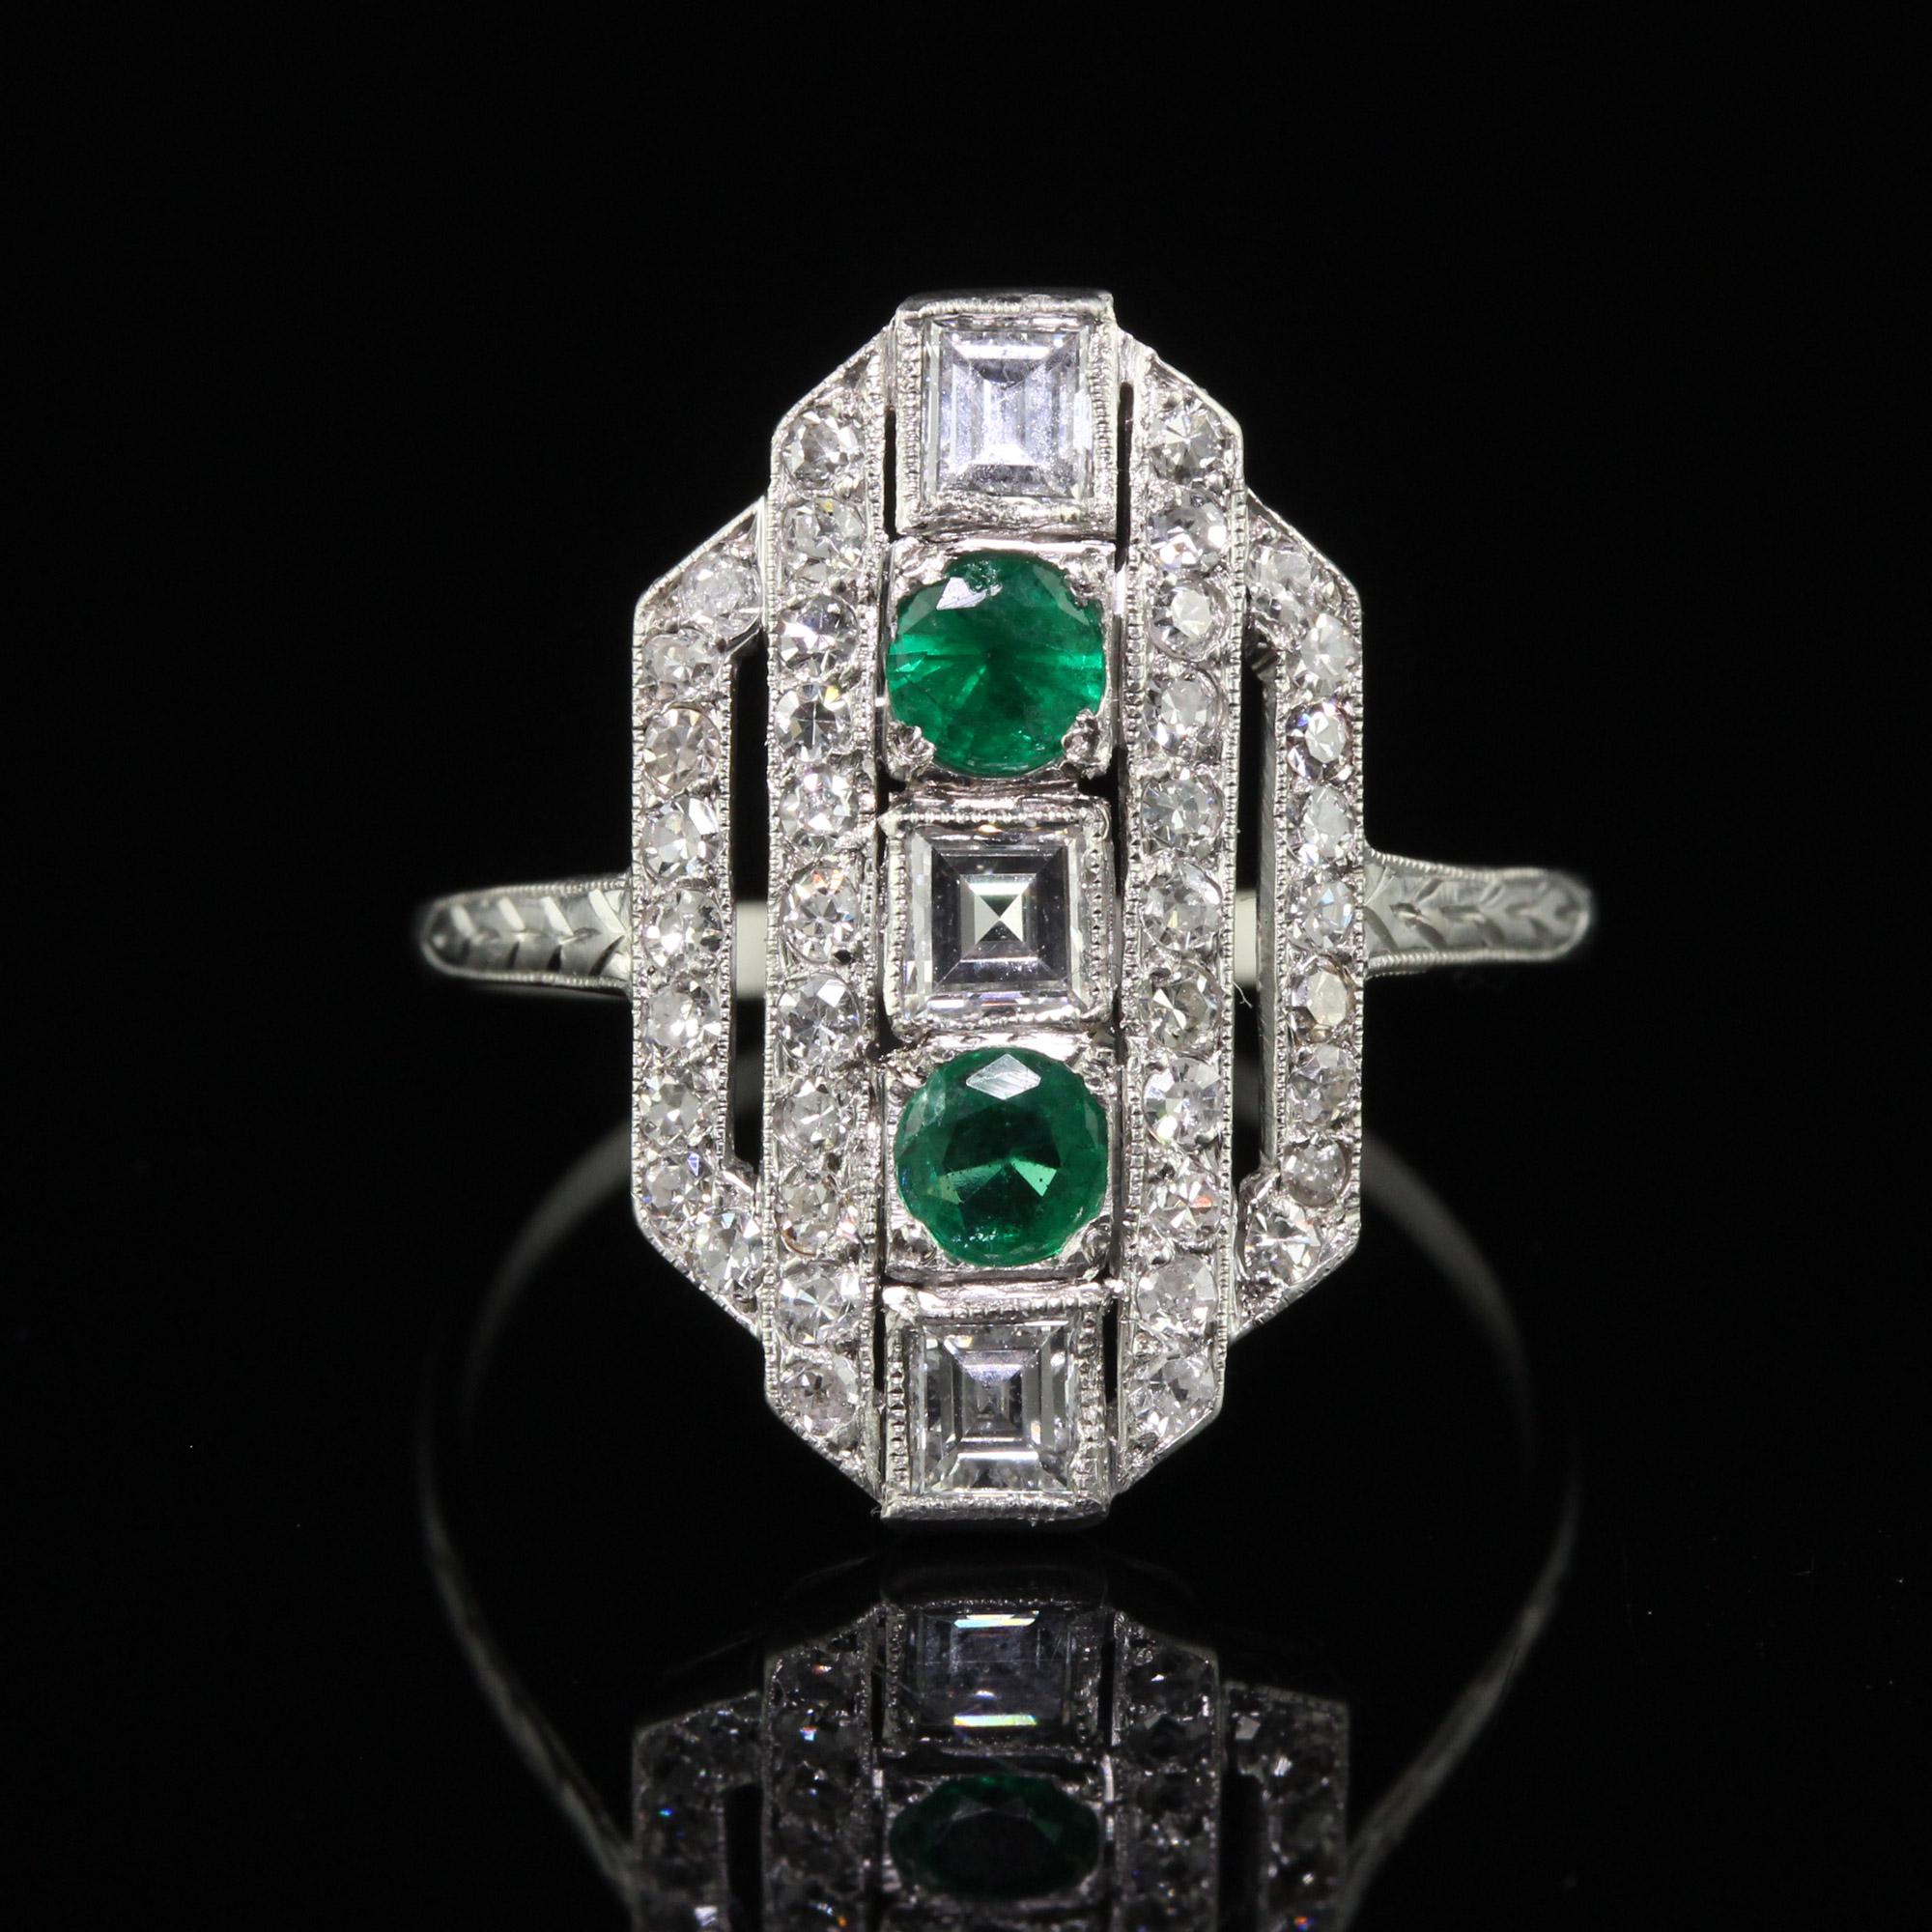 Antique Art Deco Platinum Carre Cut Diamond and Emerald Shield Ring - Size 6 3/4 1